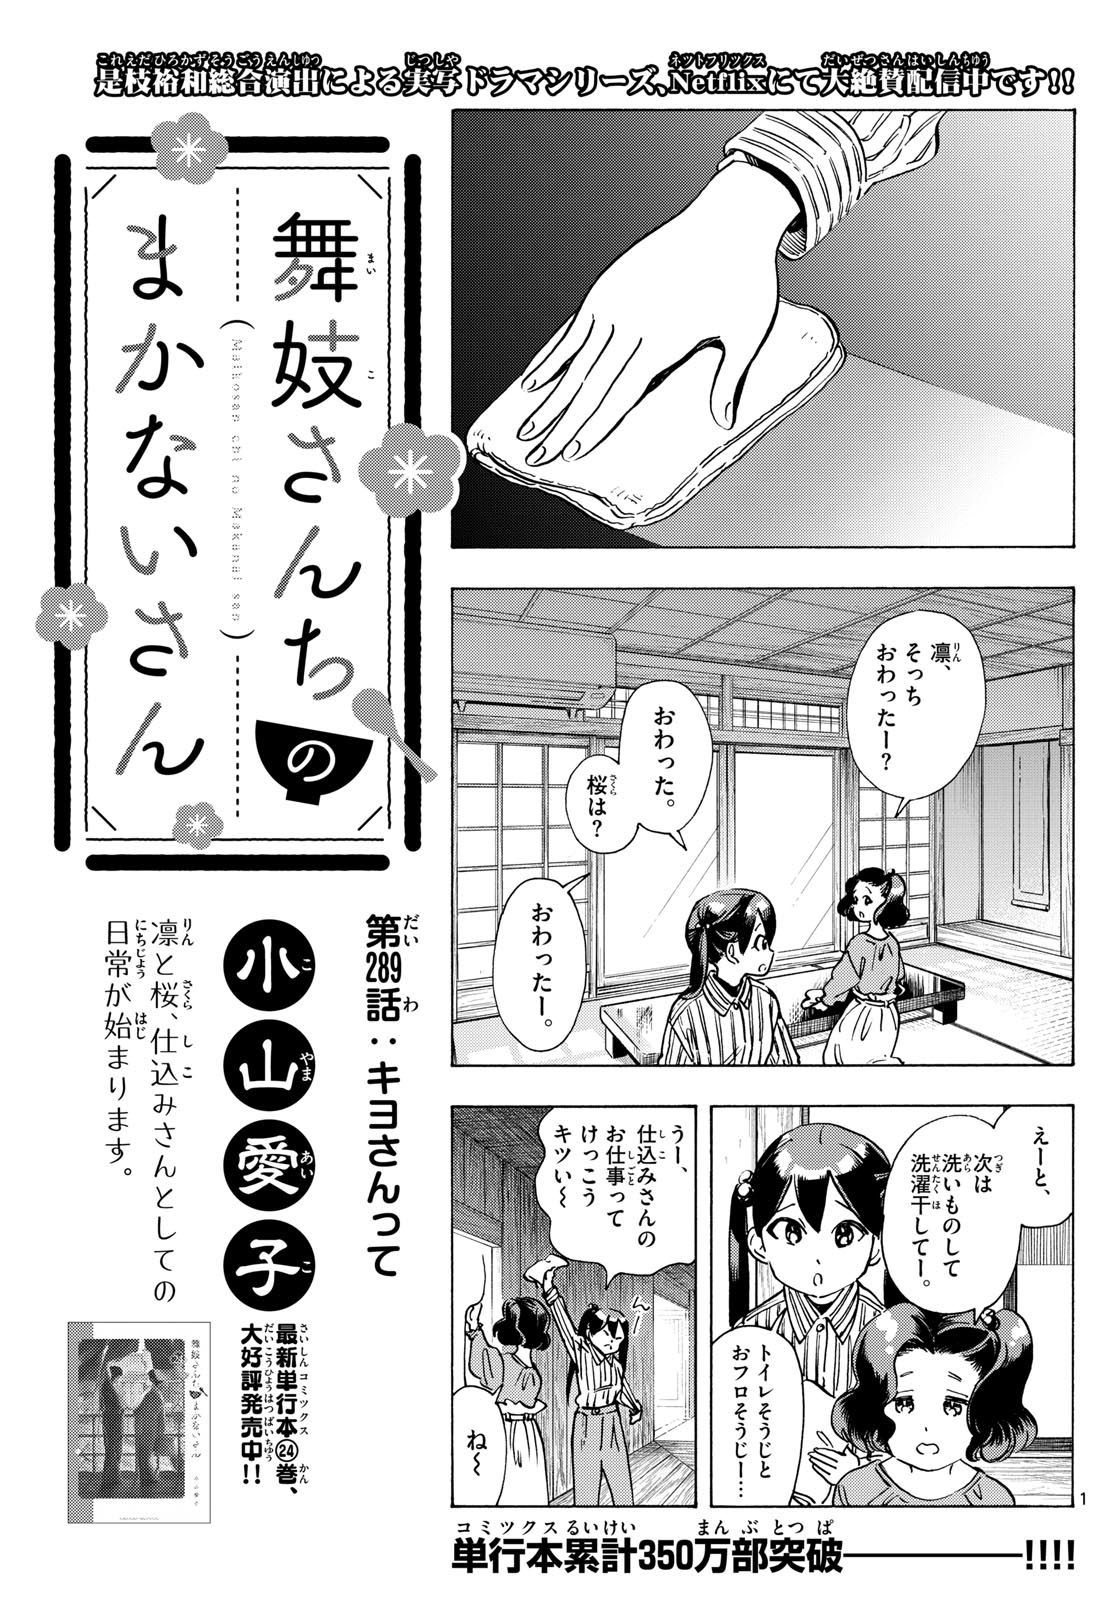 Maiko-san Chi no Makanai-san - Chapter 289 - Page 1